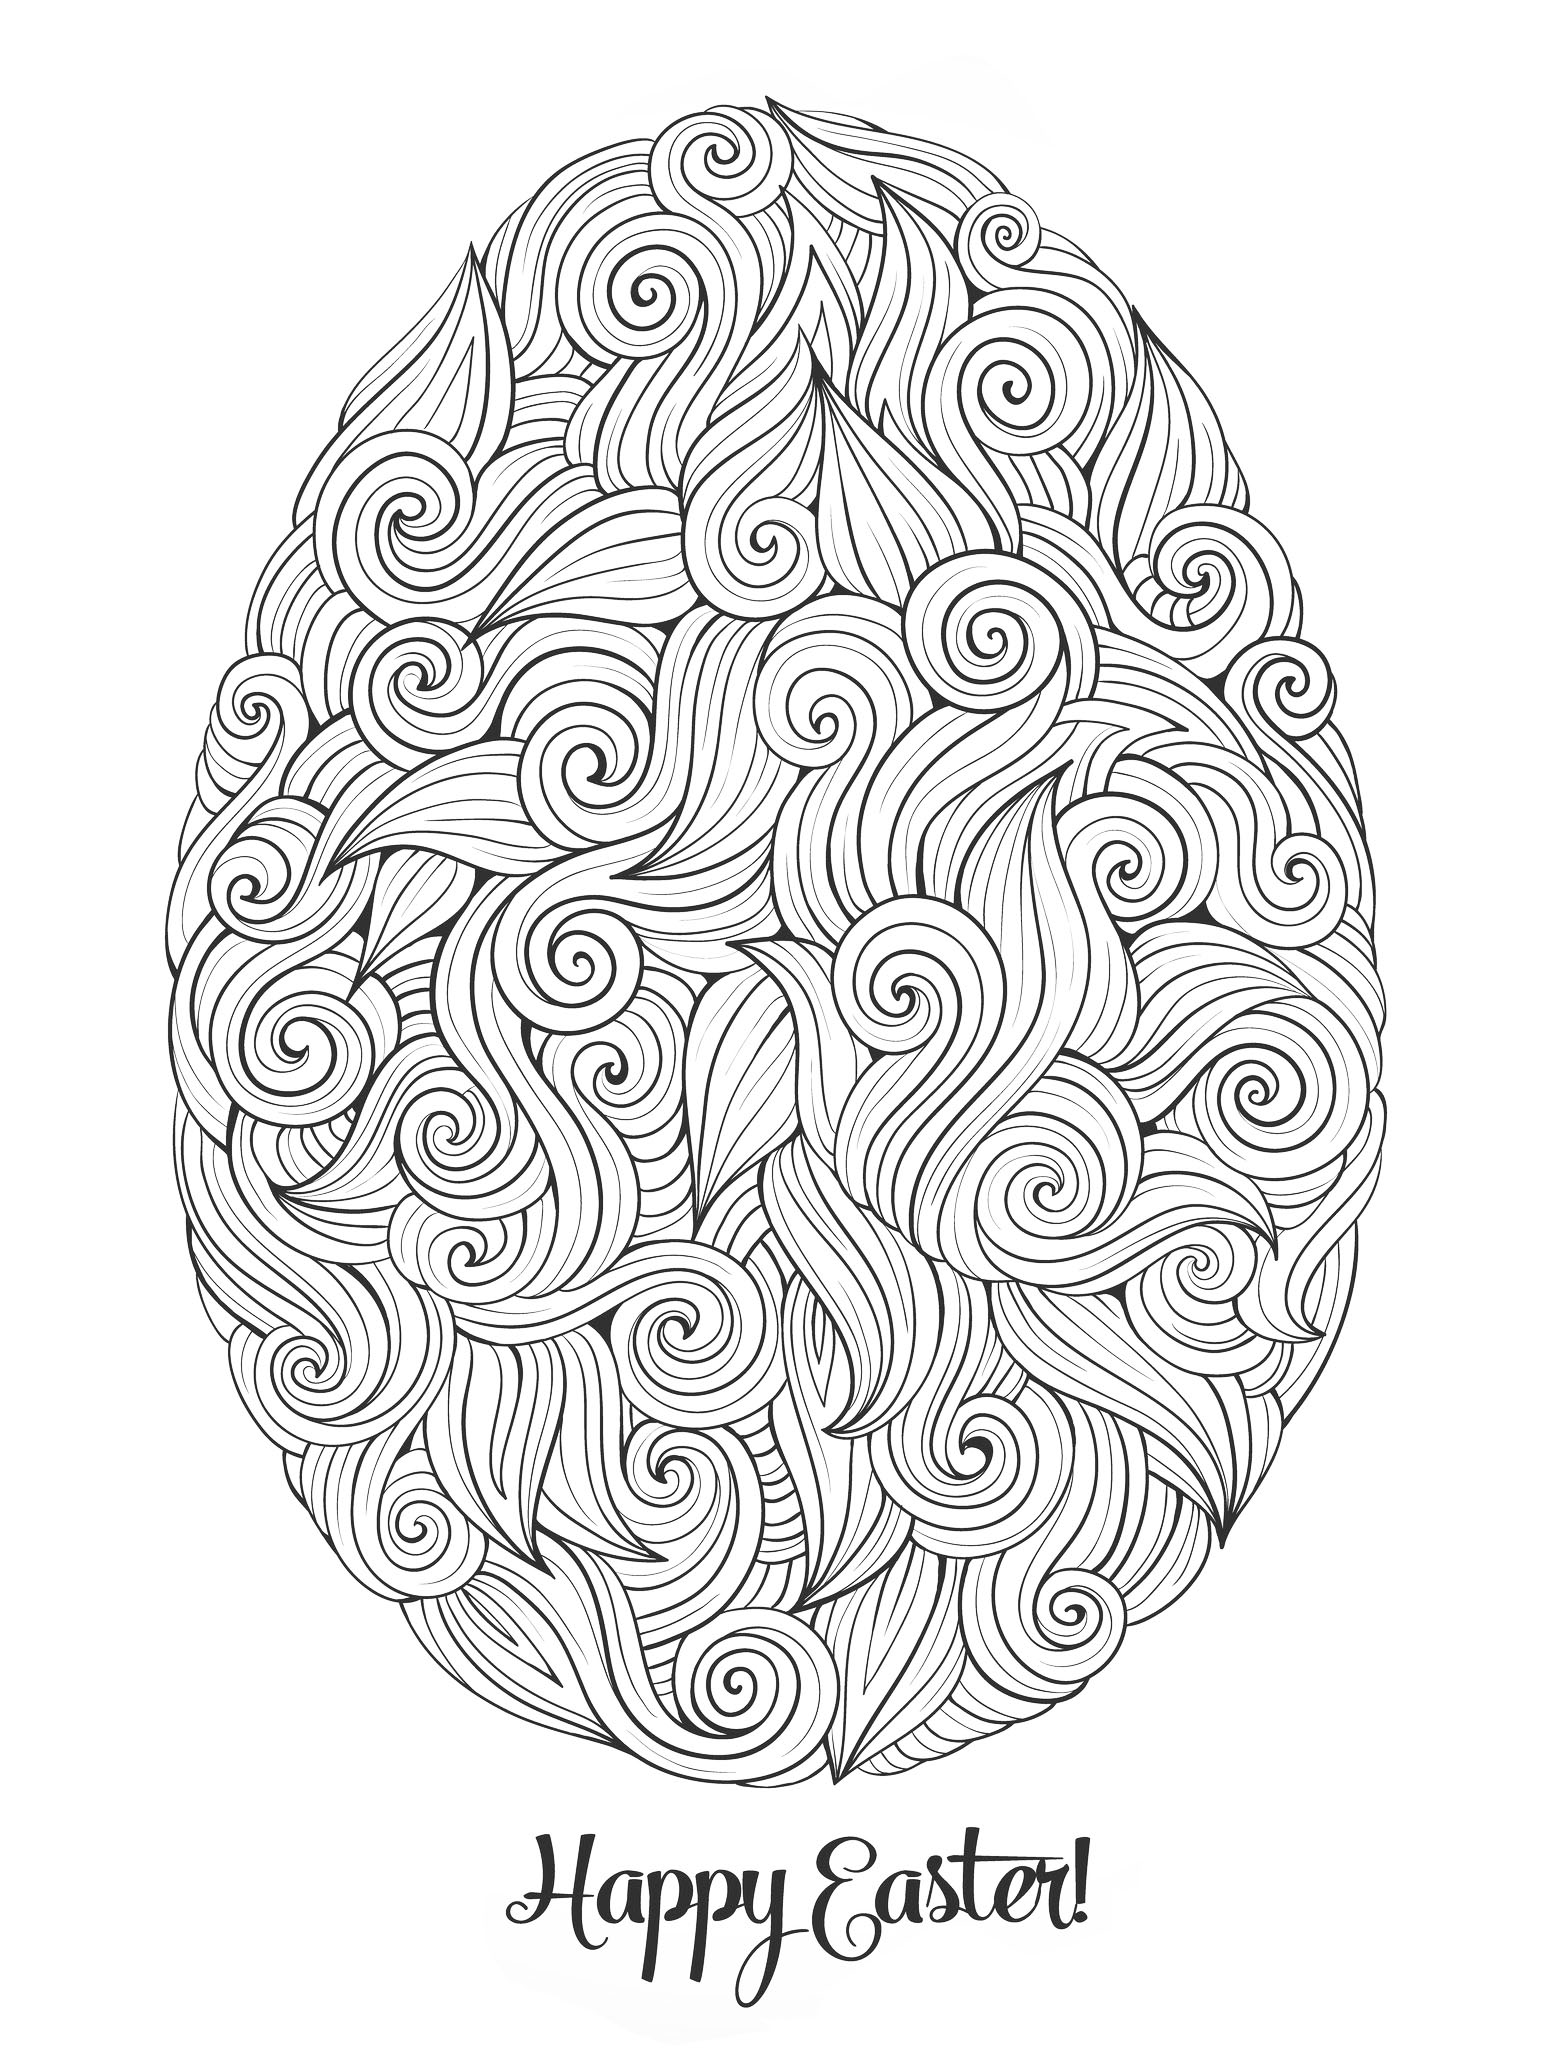 Coloring adult easter egg by olga_kostenko